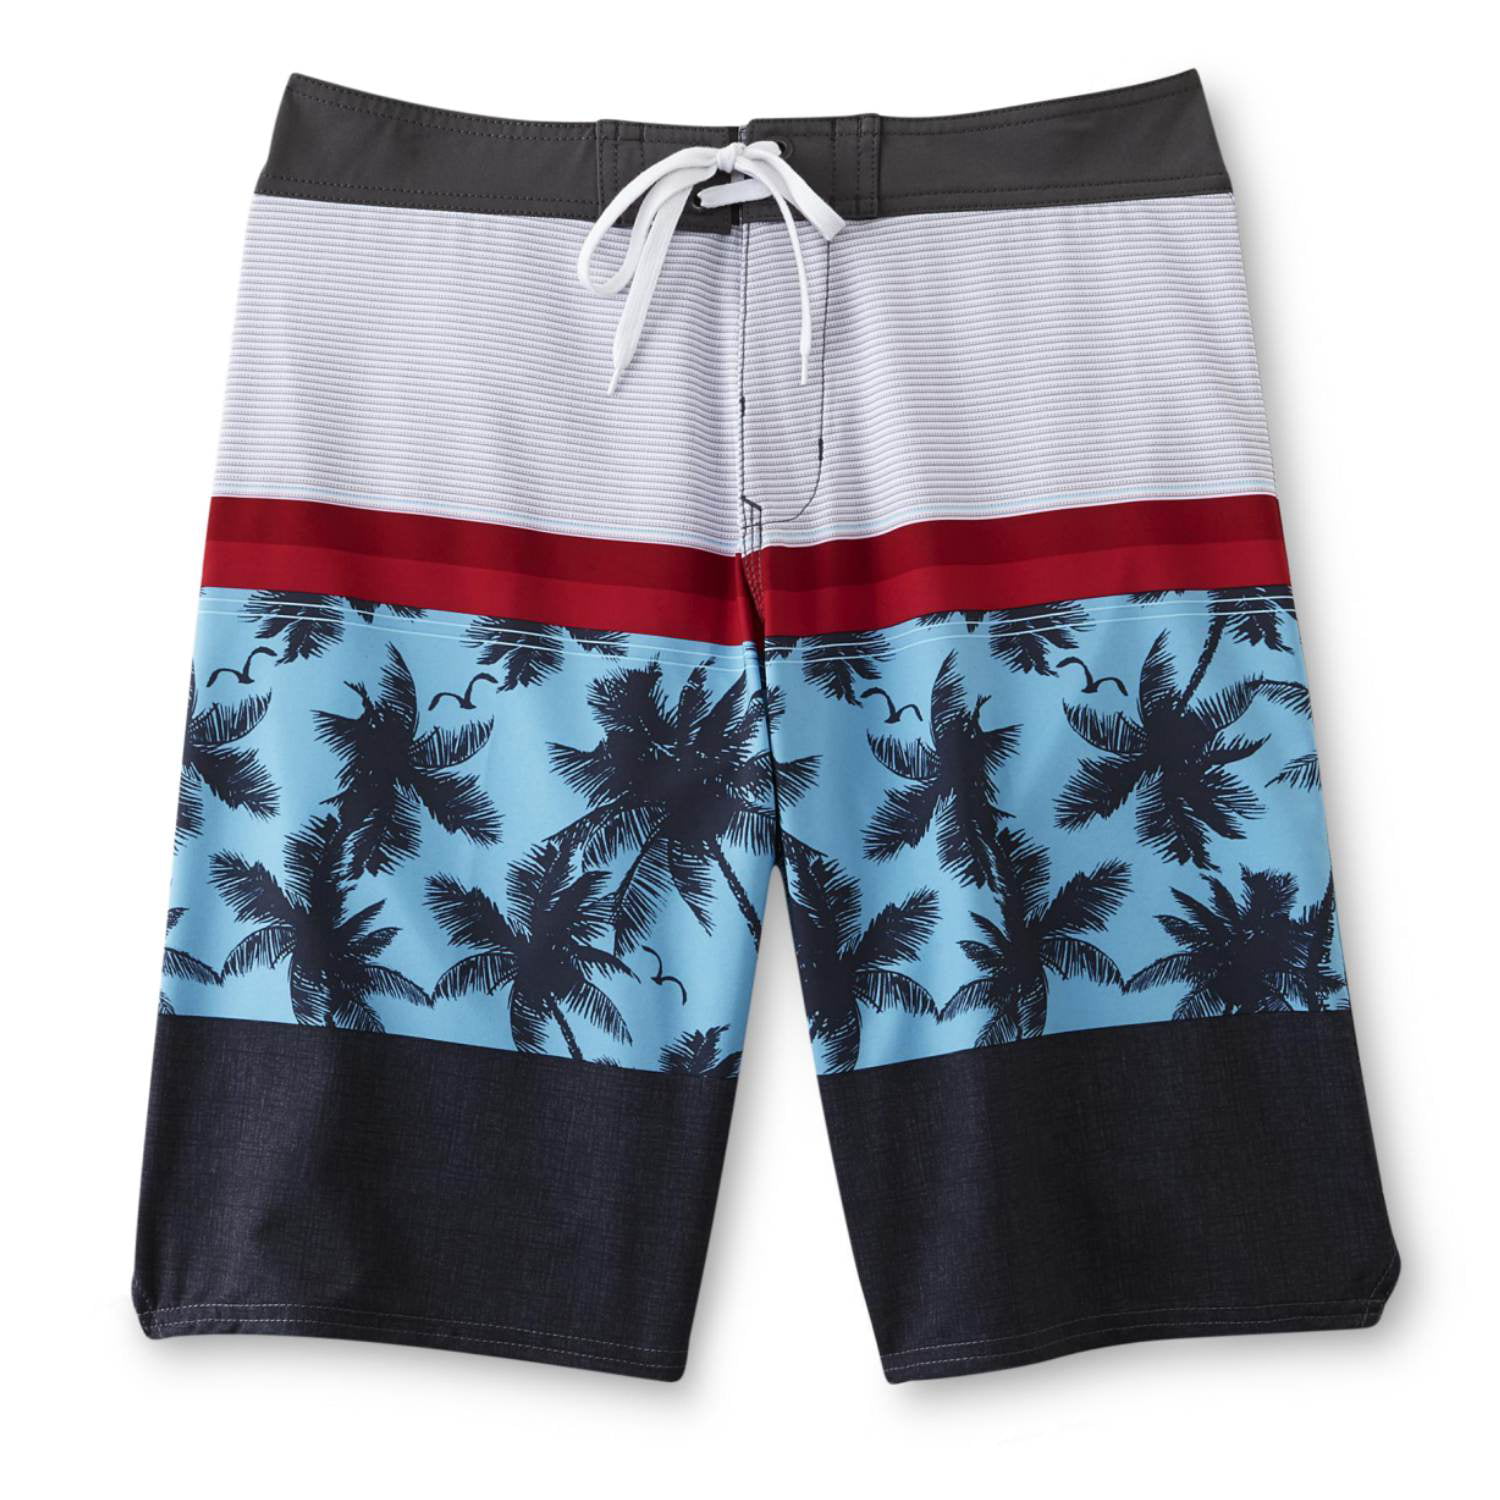 Hajotrawa Mens Sport Lounge Quick Dry Beach Board Shorts Elastic Waist Shorts